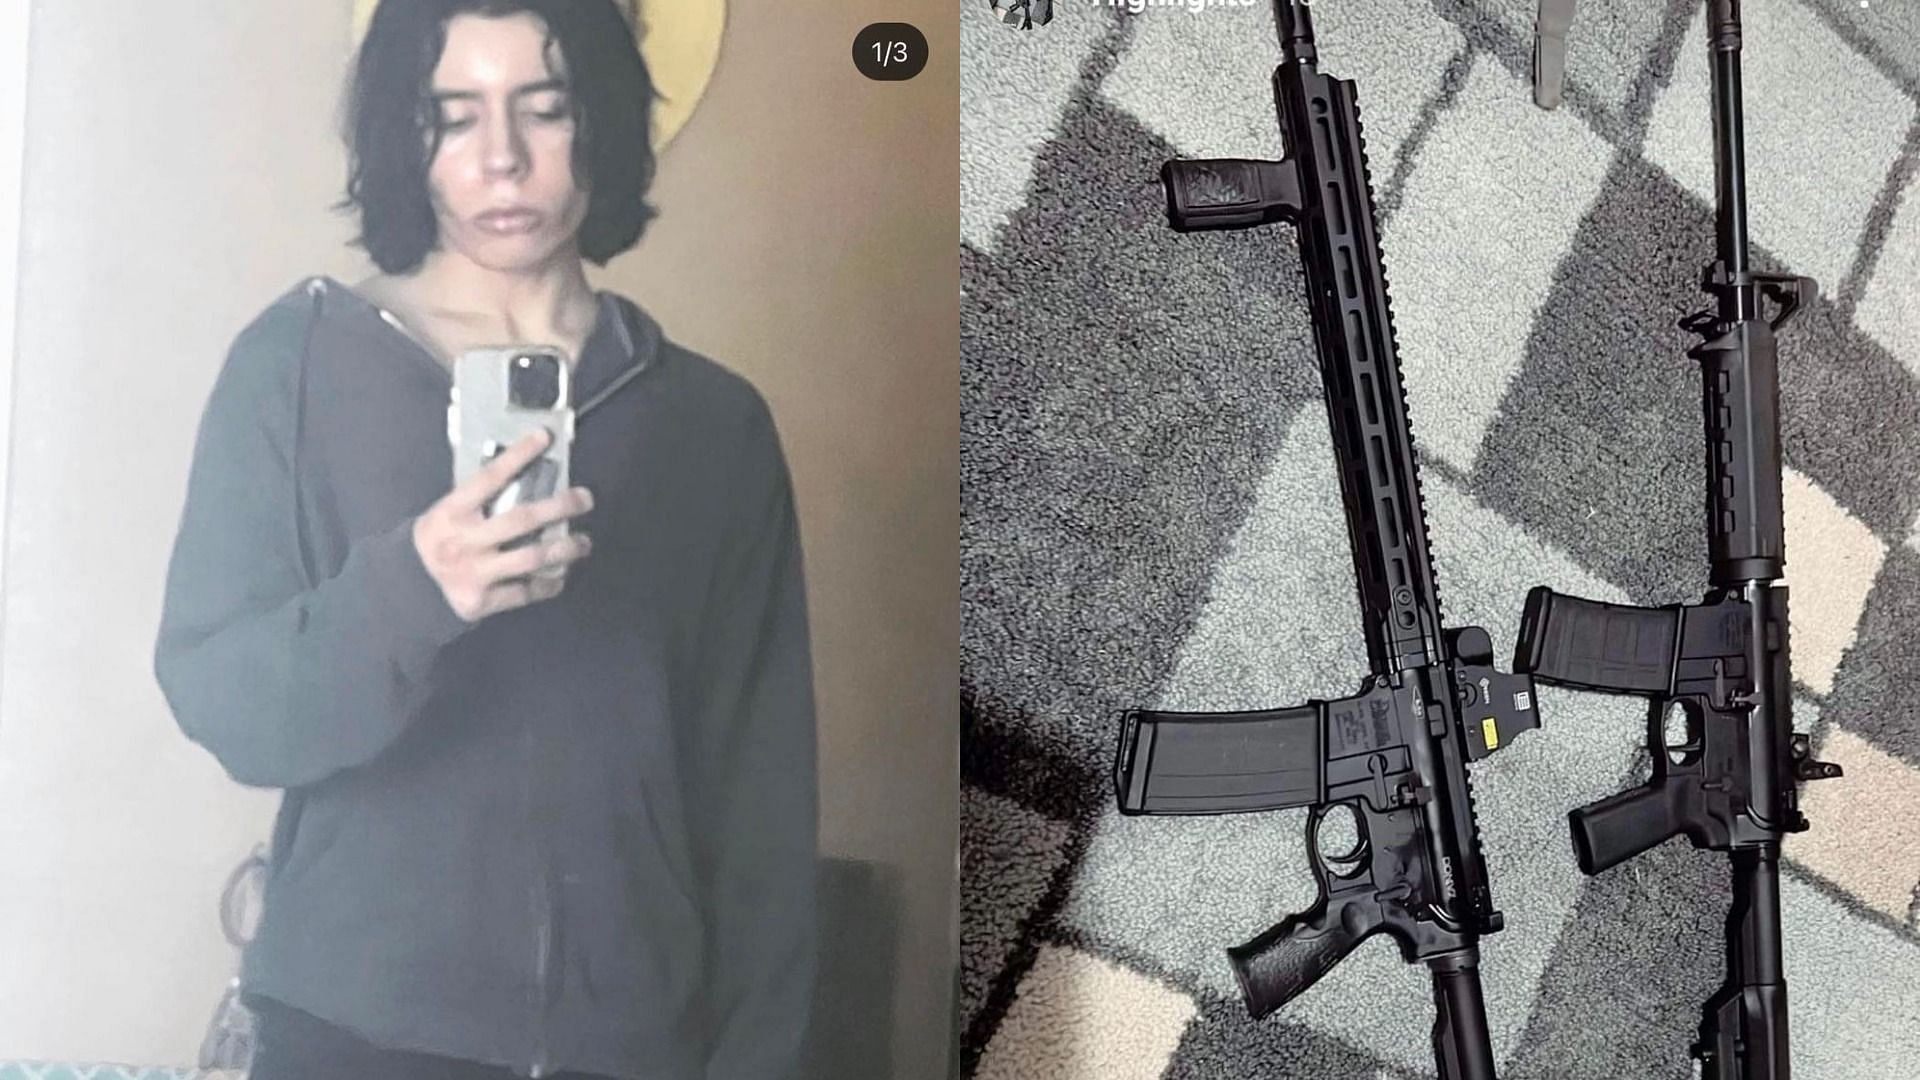 Uvalde shooter Salvador Ramos purchased a gun on his 18th birthday (Image via @salv8dor_ / Instagram)